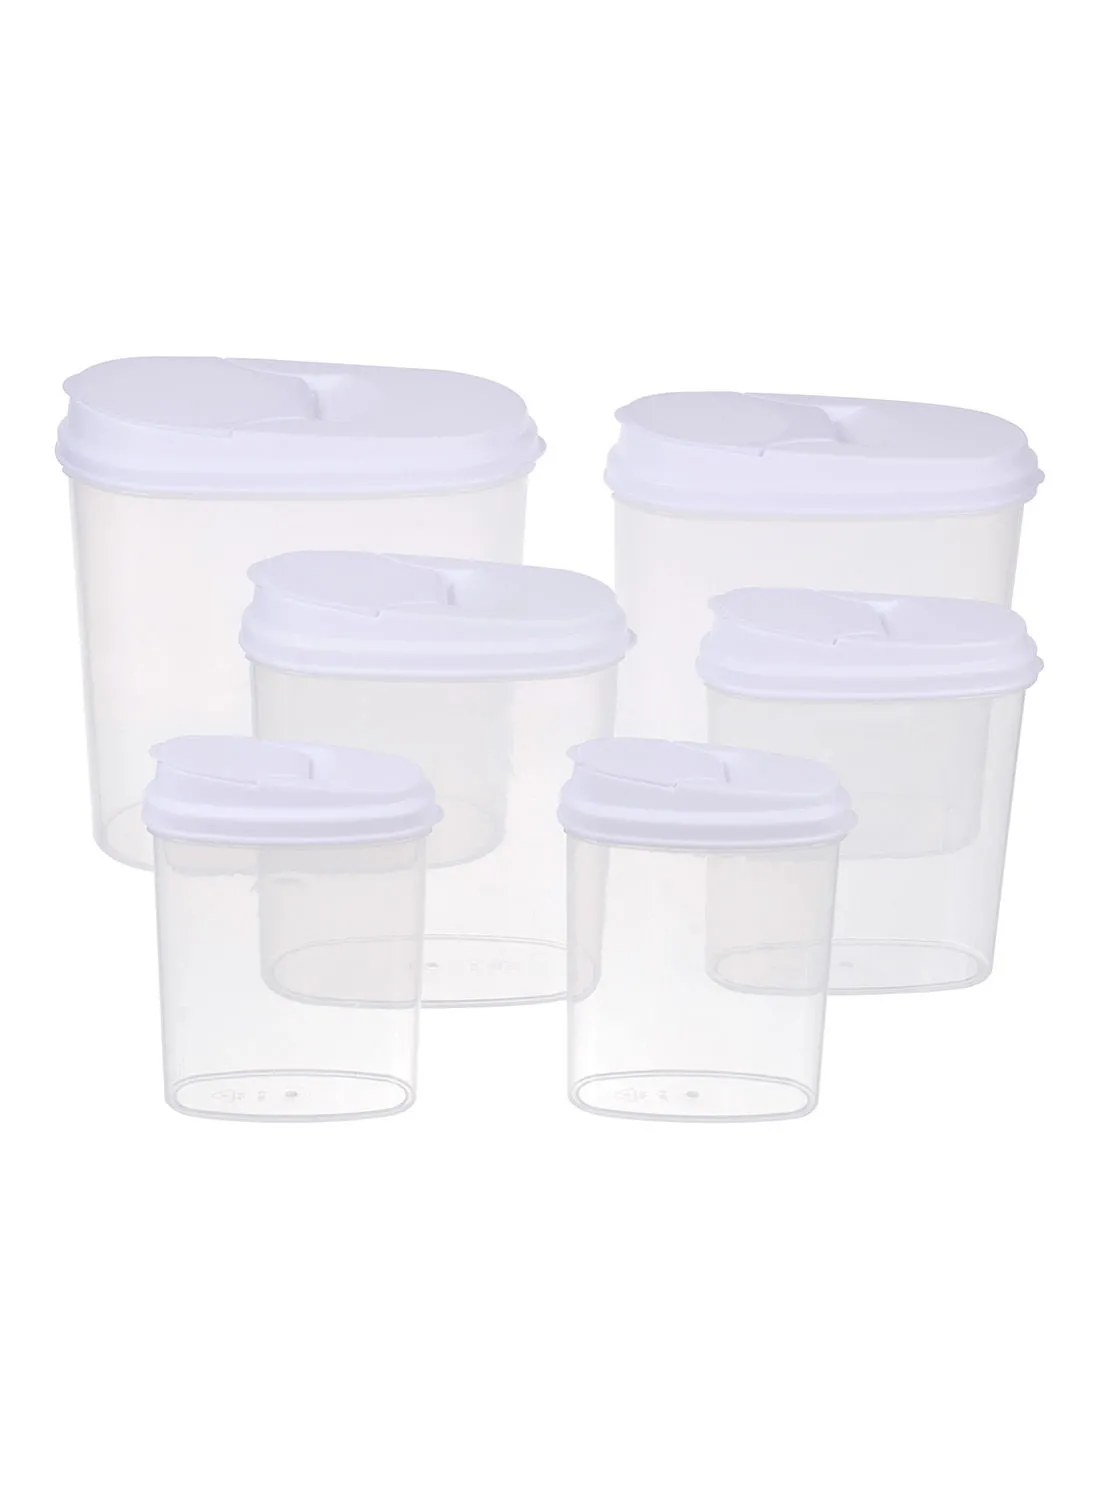 Amal 6 Piece Plastic Food Container Set - Easy Pour Lids - Food Storage Box - Storage Boxes - Kitchen Cabinet Organizers - White